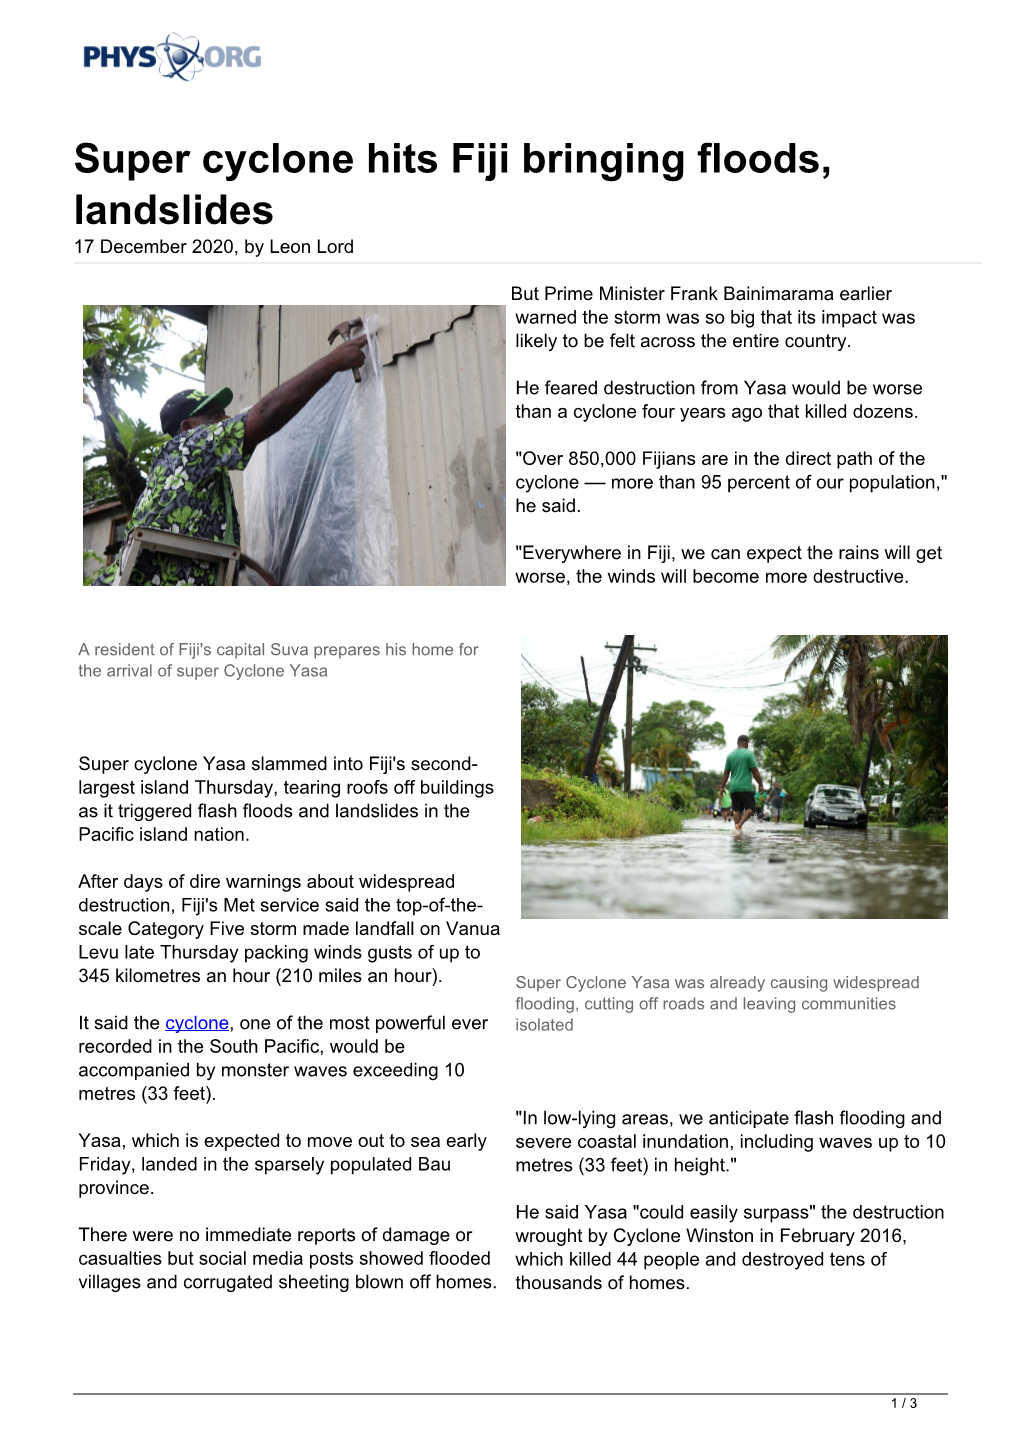 Super Cyclone Hits Fiji Bringing Floods, Landslides 17 December 2020, by Leon Lord